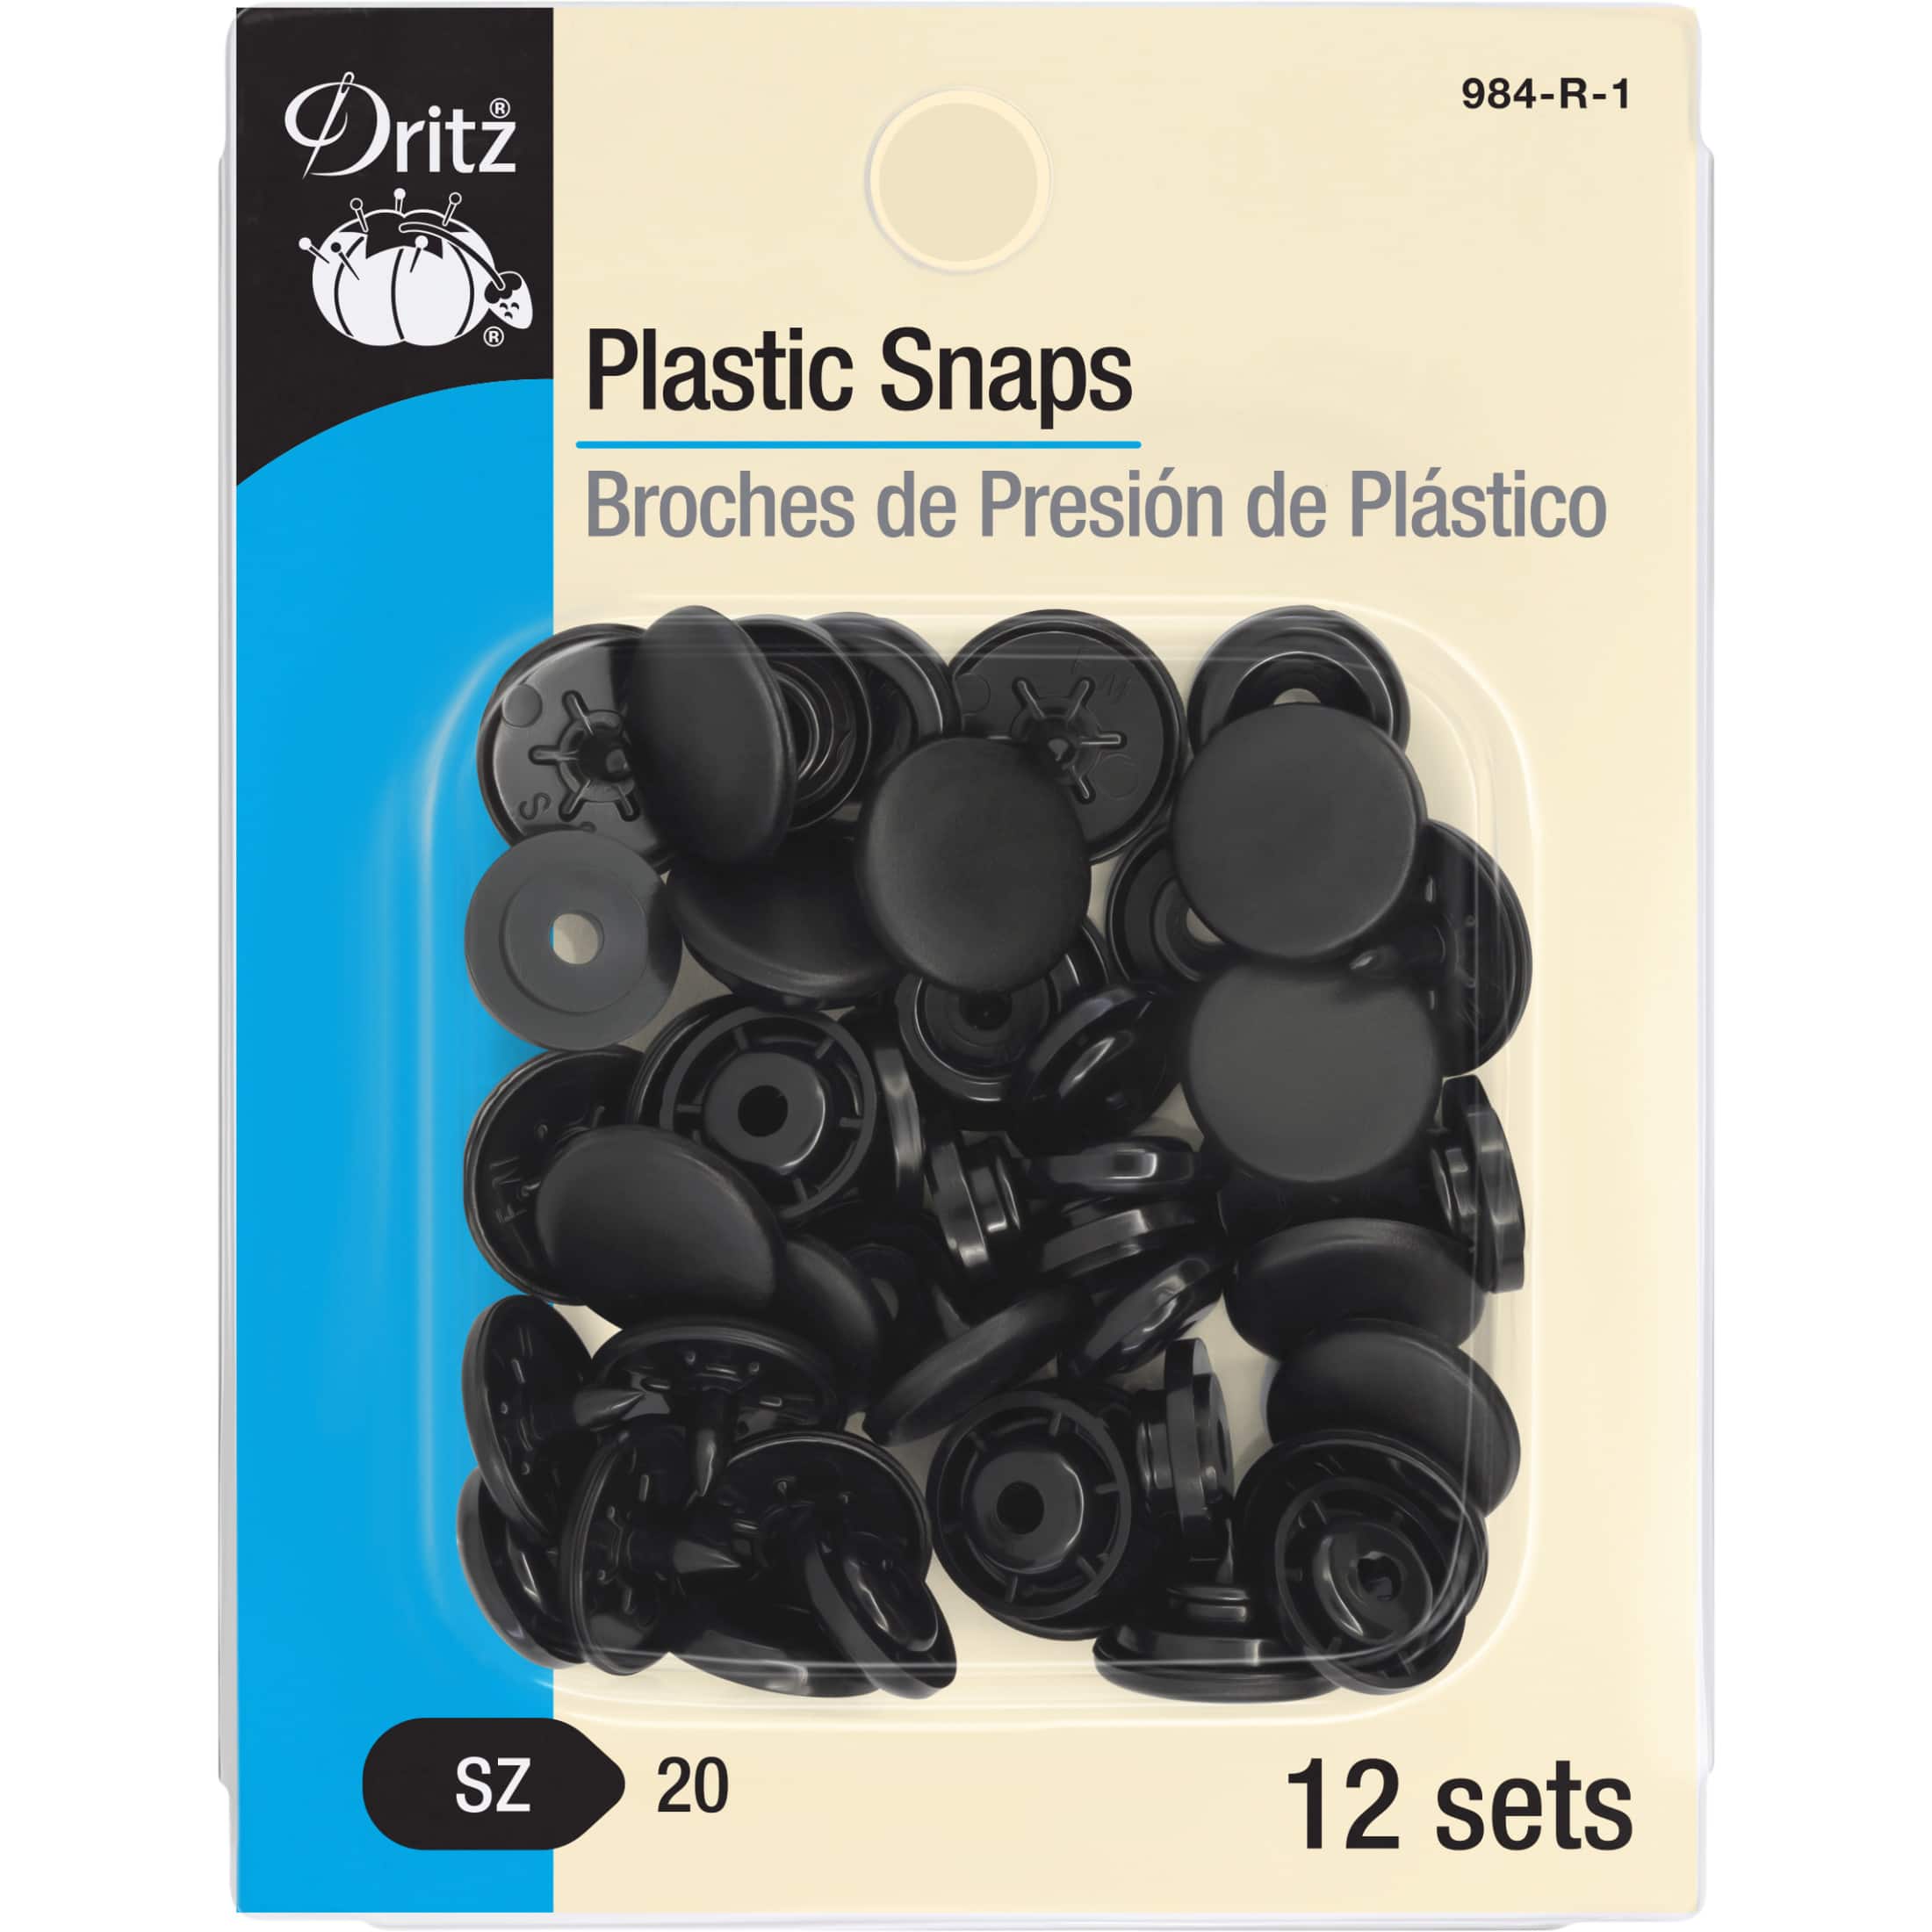 Plastic Snaps